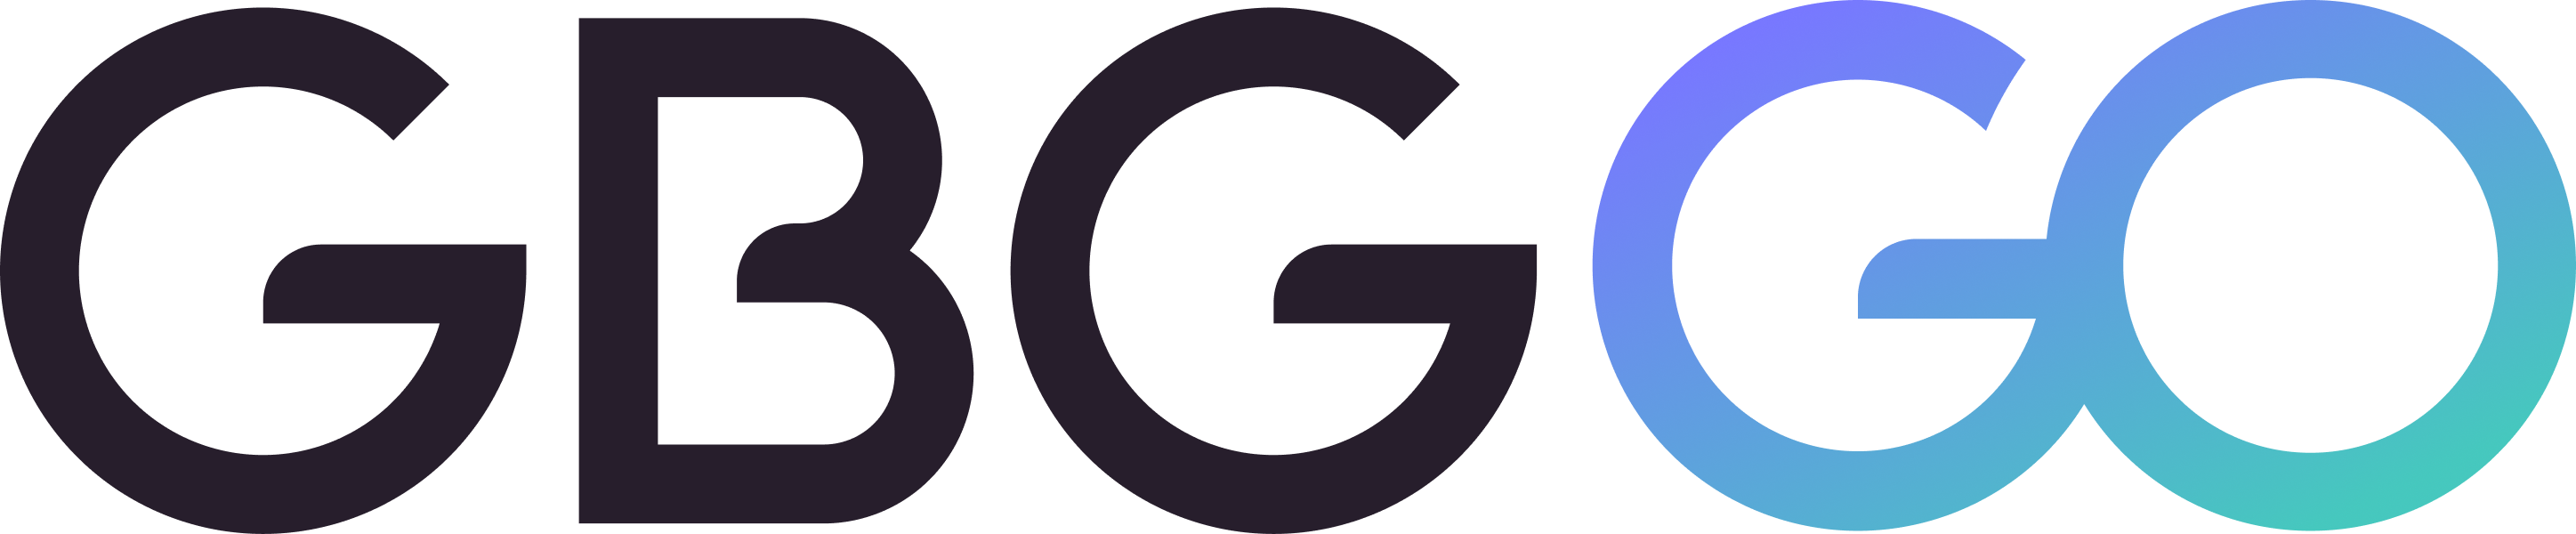 GBG-GO-Primary-Logo